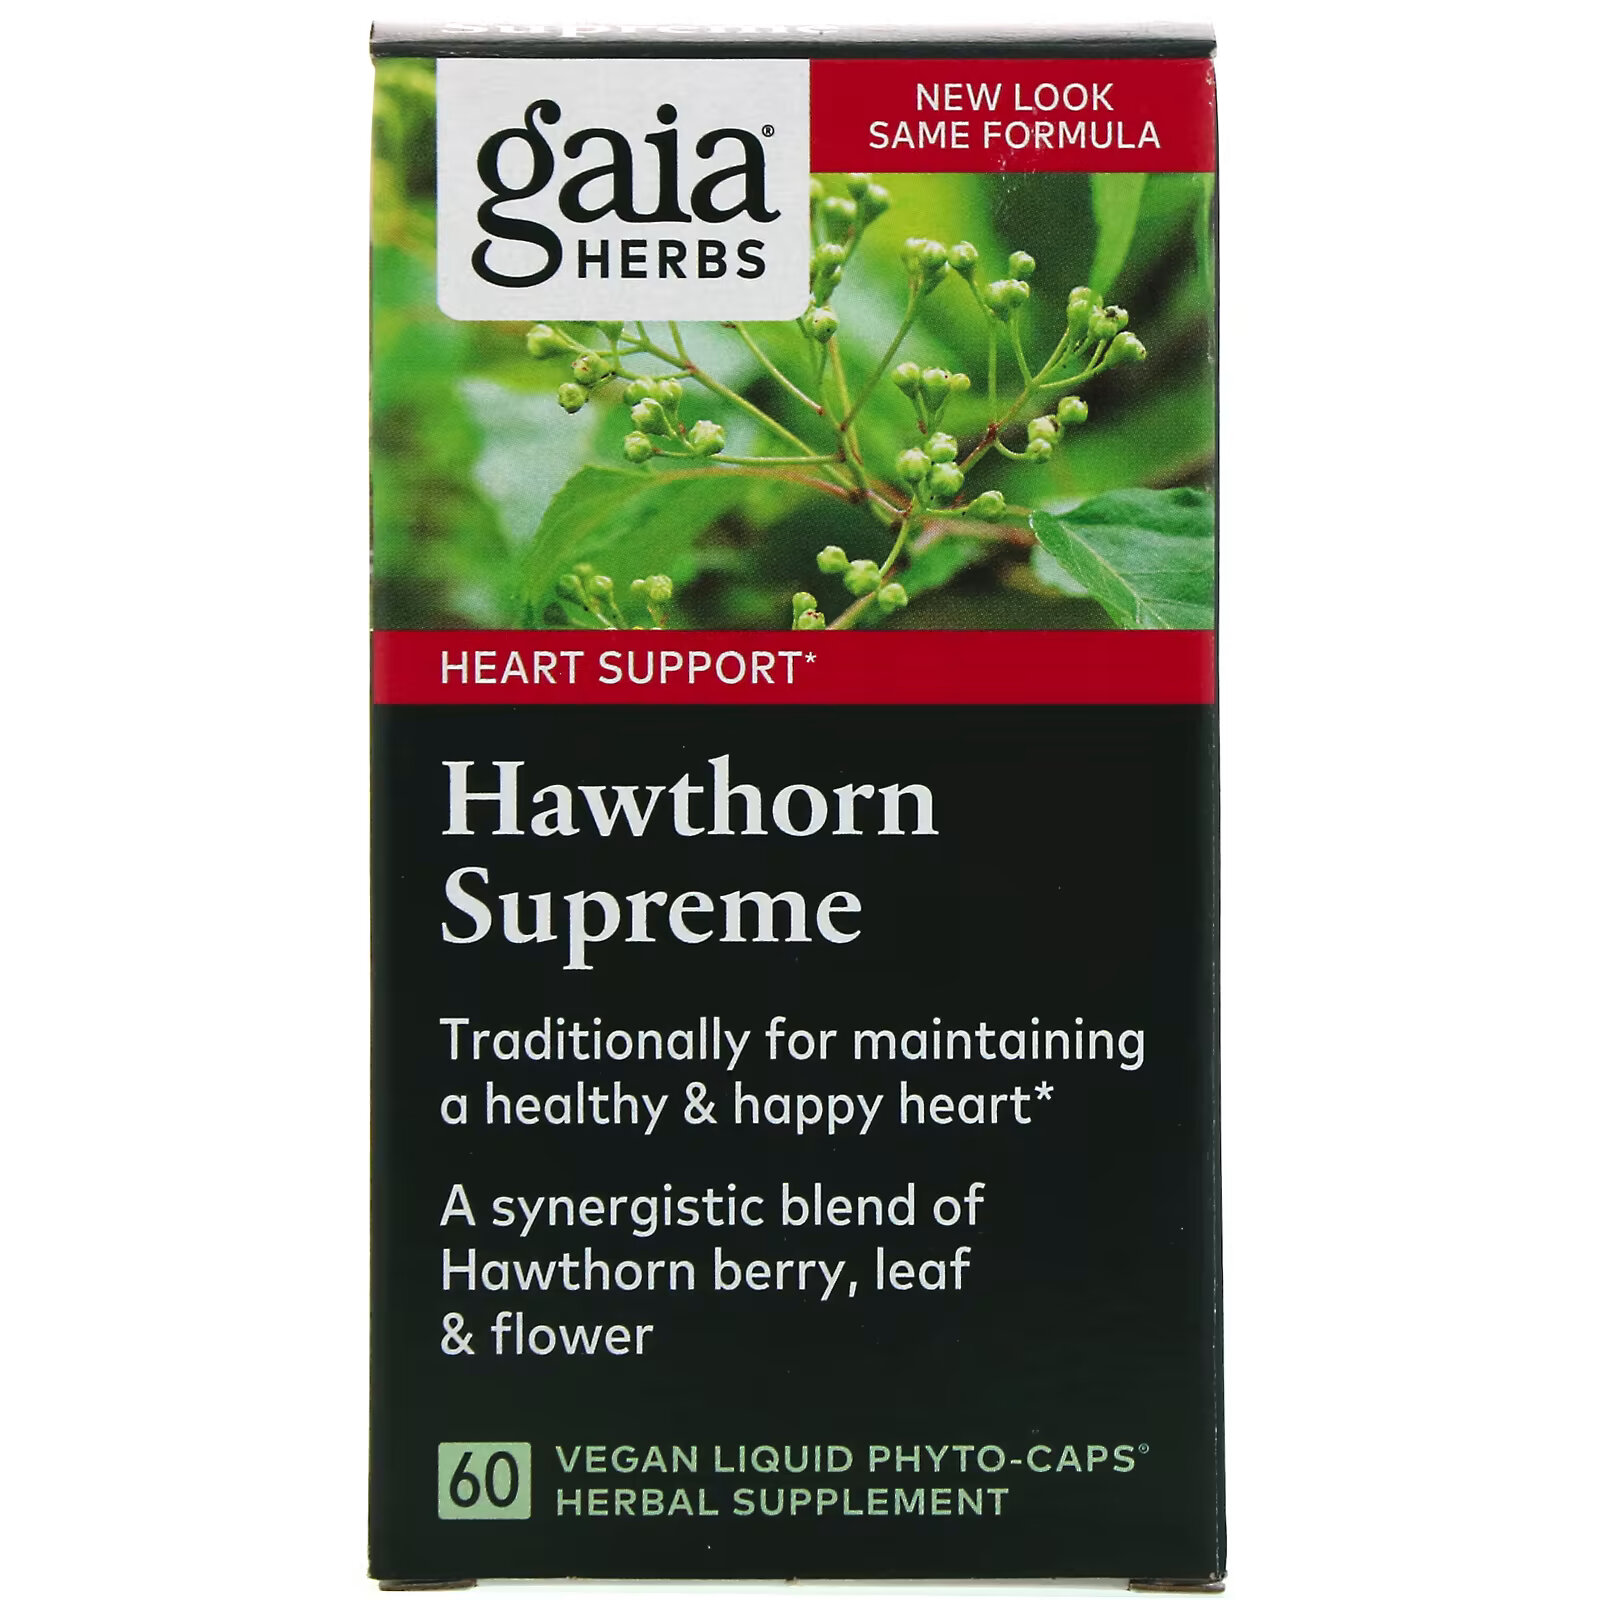 Gaia Herbs, Hawthorn Supreme, 60 растительных капсул с жидкостью gaia herbs turmeric supreme extra strength куркума 60 растительных фито капсул с жидкостью